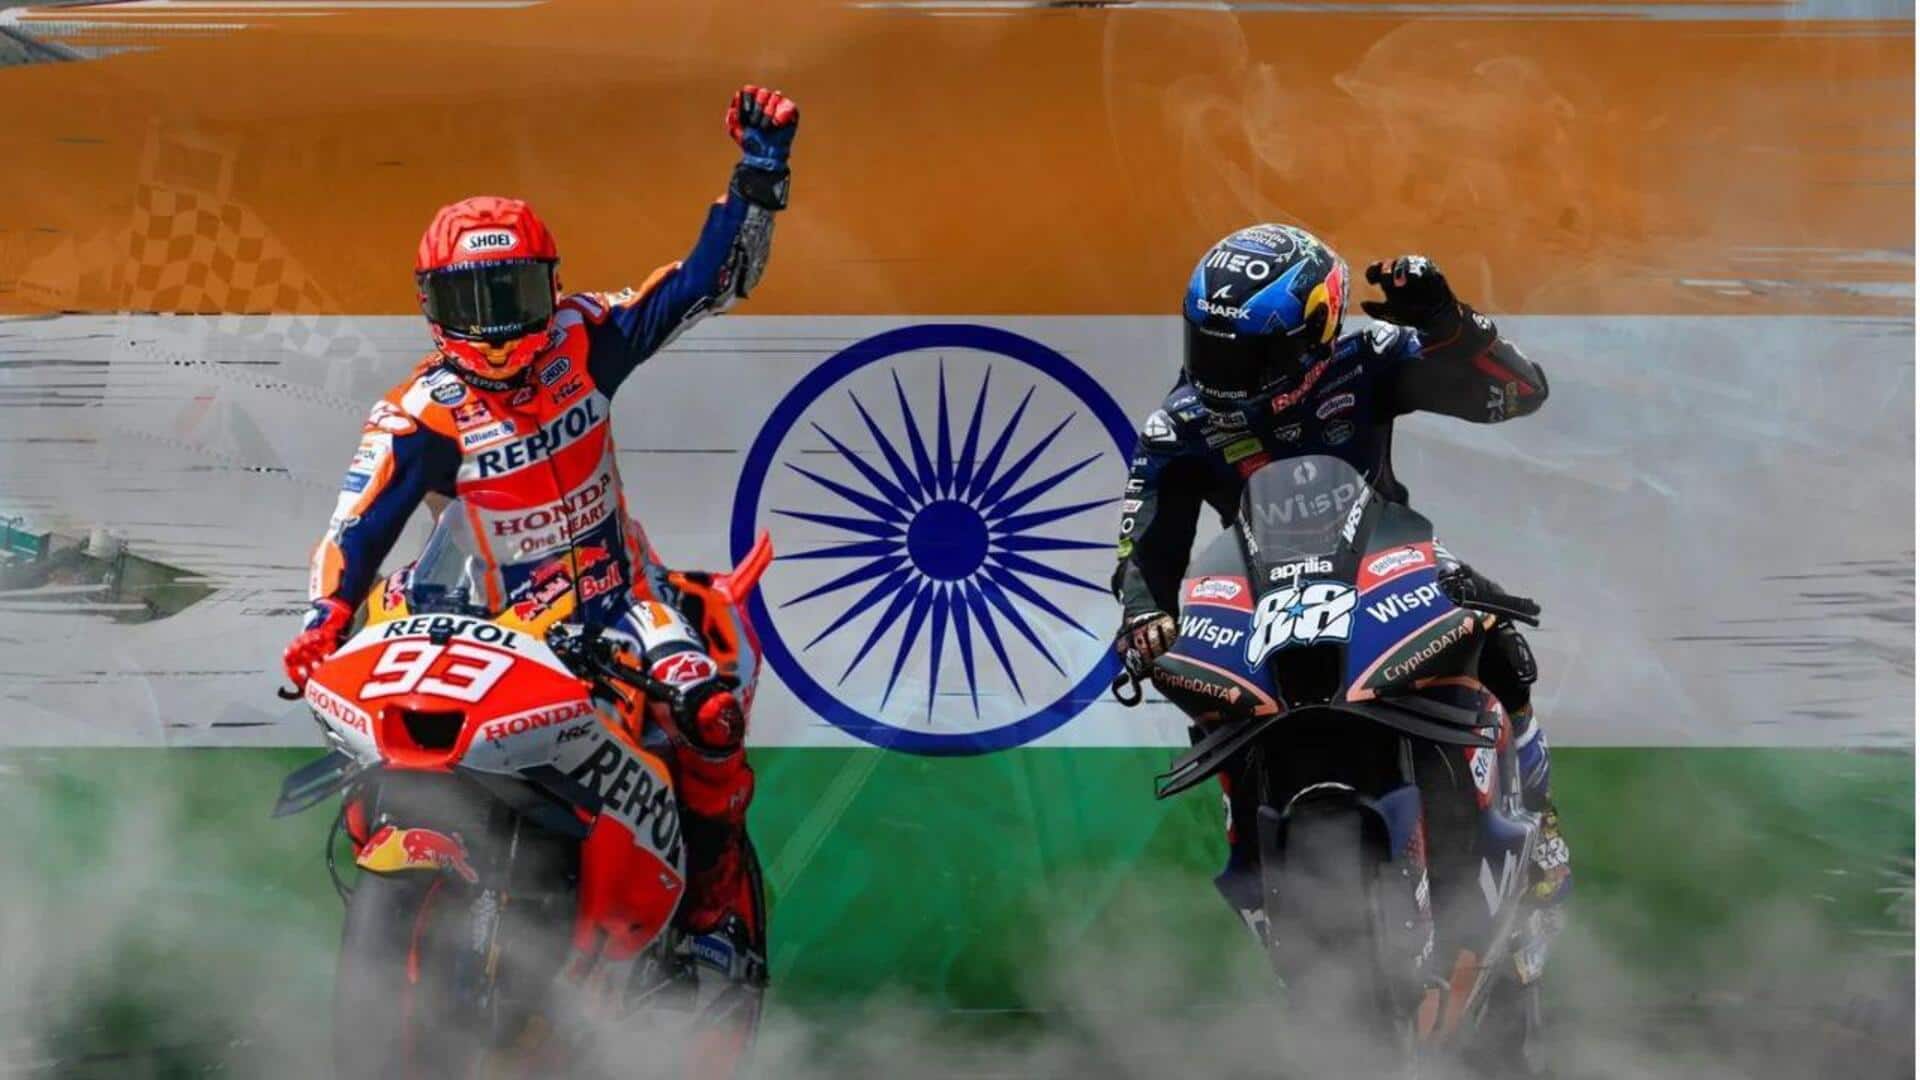 MotoGP India: Technical glitch causes visa delays; riders stranded